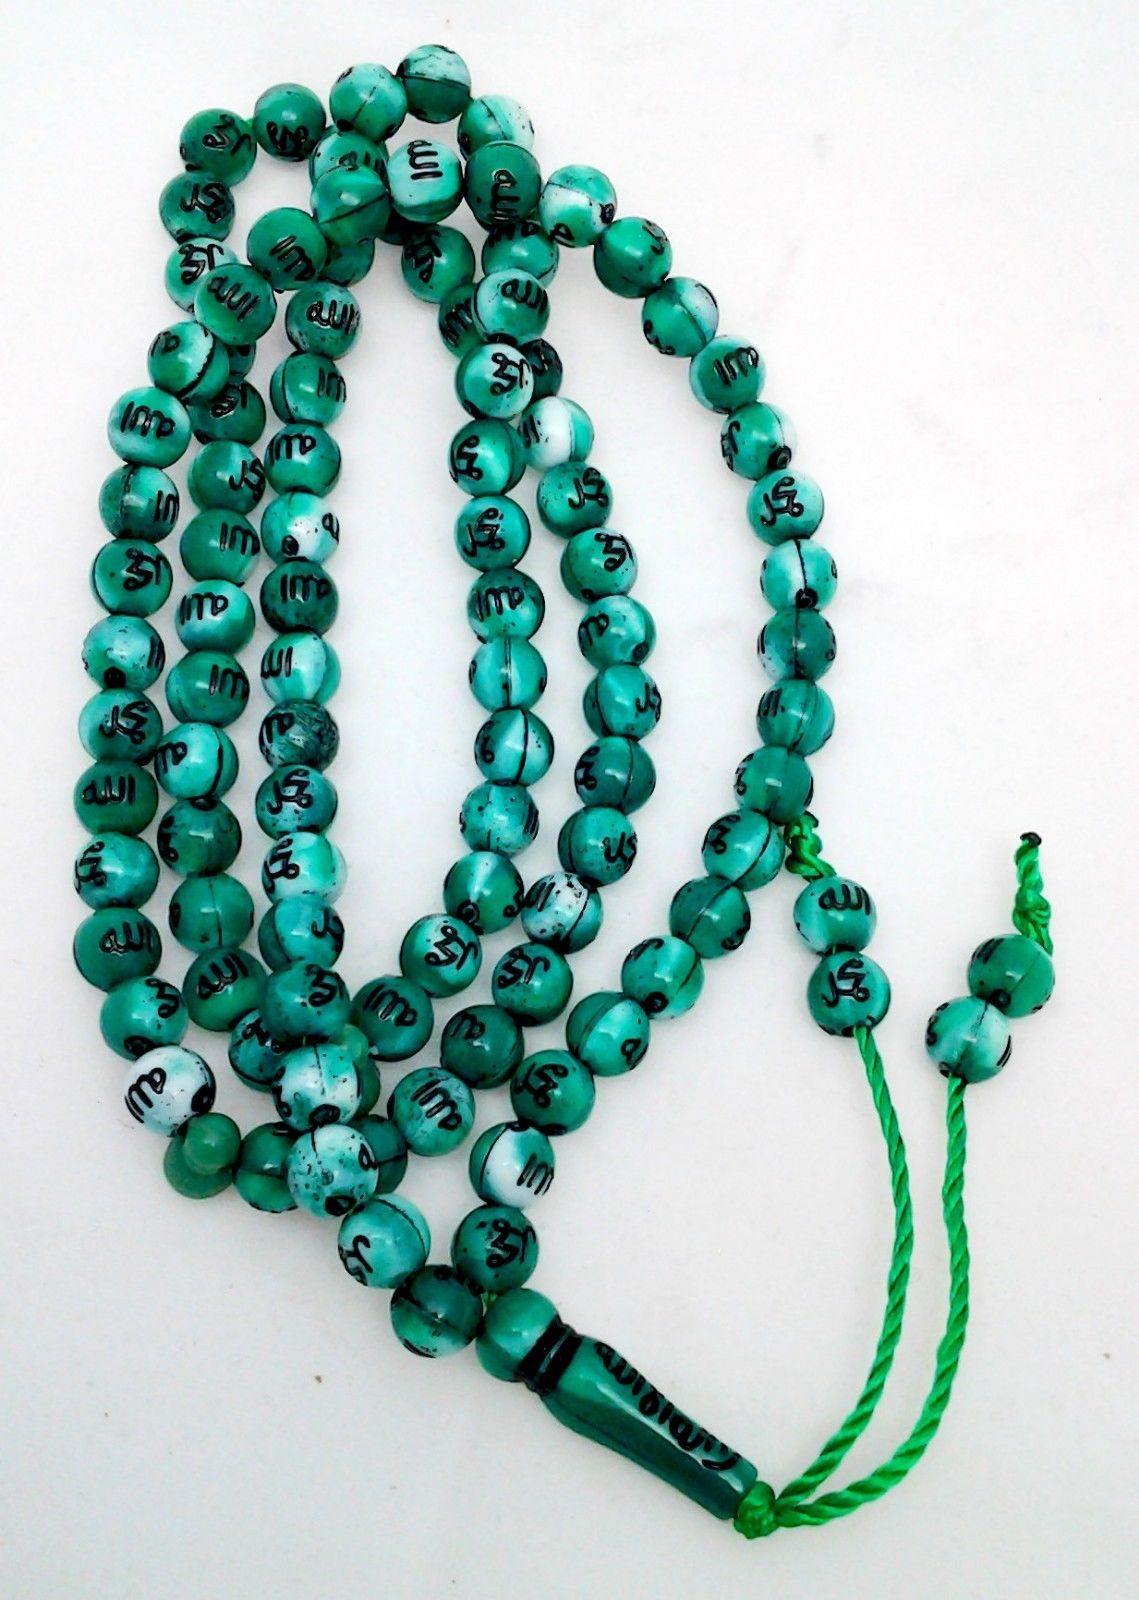 New Islamic Salah 6mm Small Prayer Beads 99 Misbaha - Arabian Shopping Zone